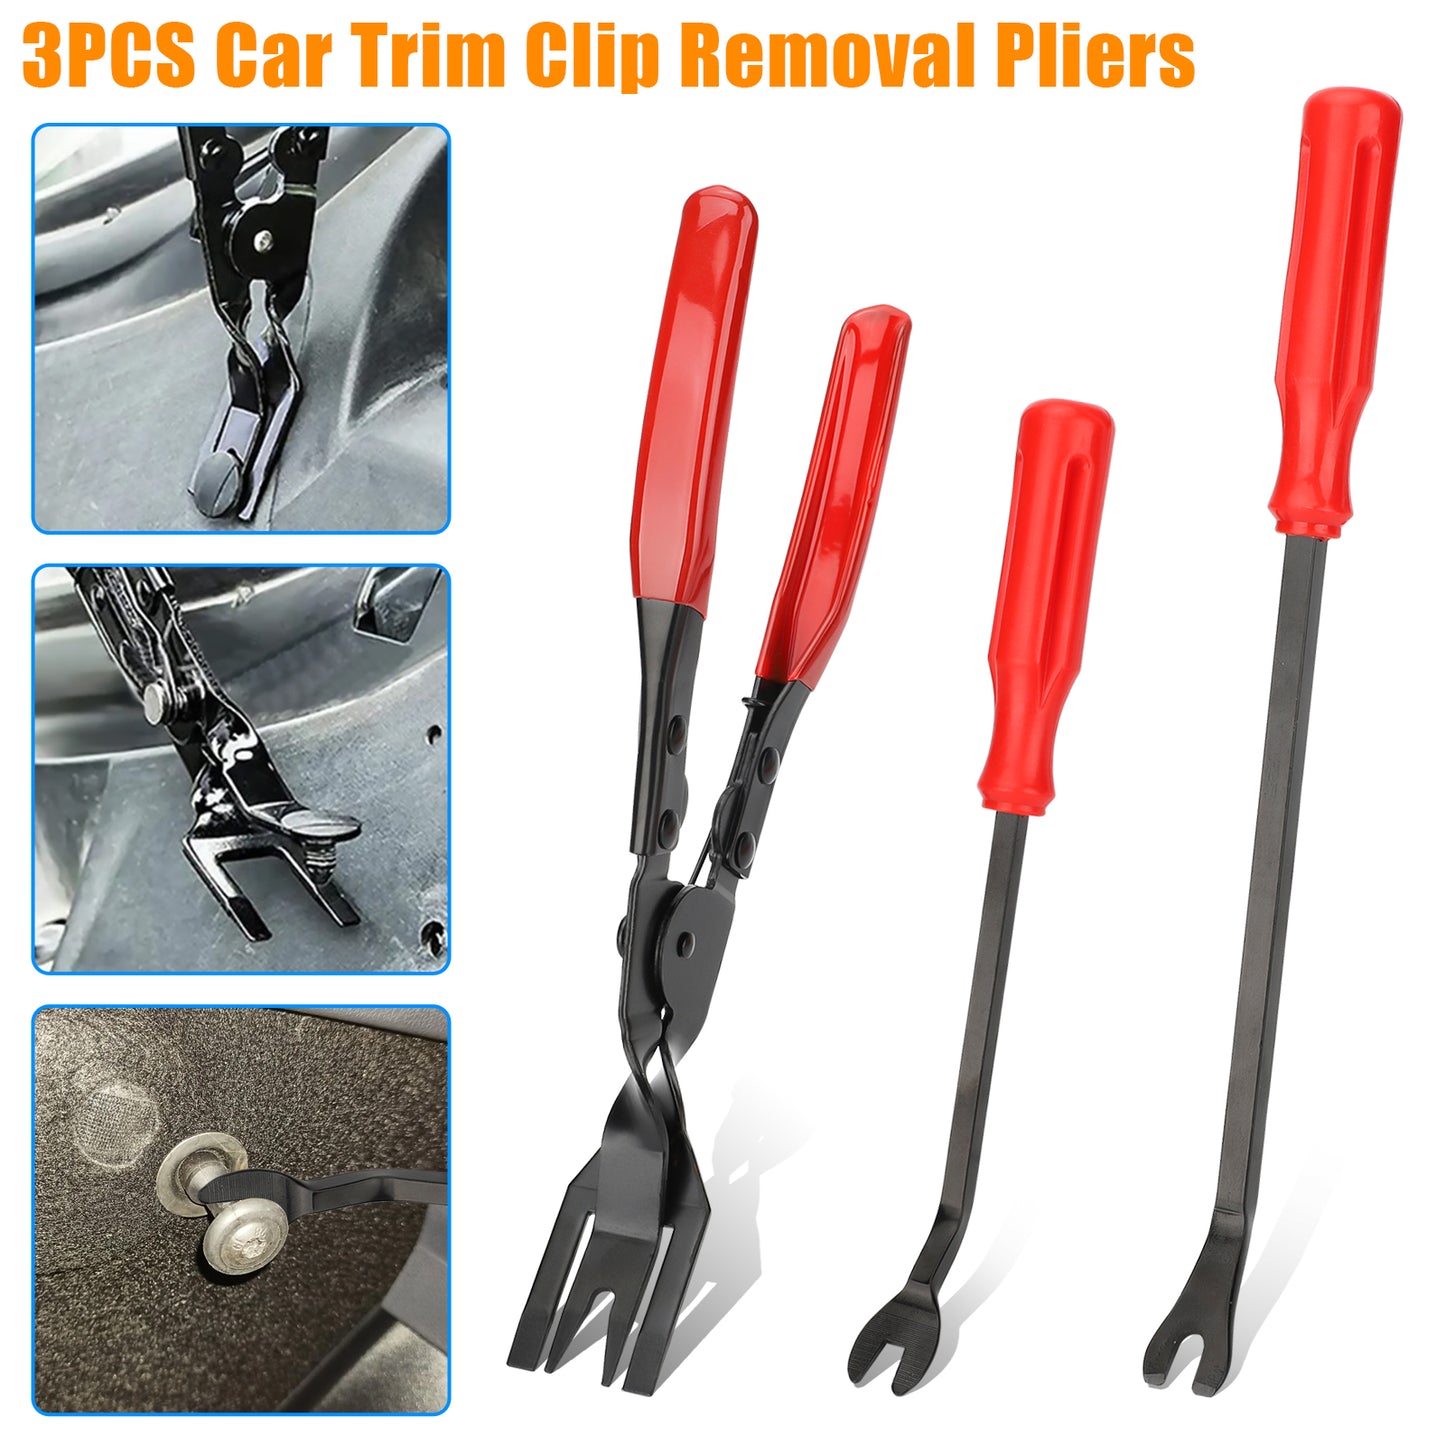 3Pcs Universal Car Trim Clip Removal Pliers - Car Auto Tool Trim Panel Clip Remover Removal Carbon Steel Pliers Tools